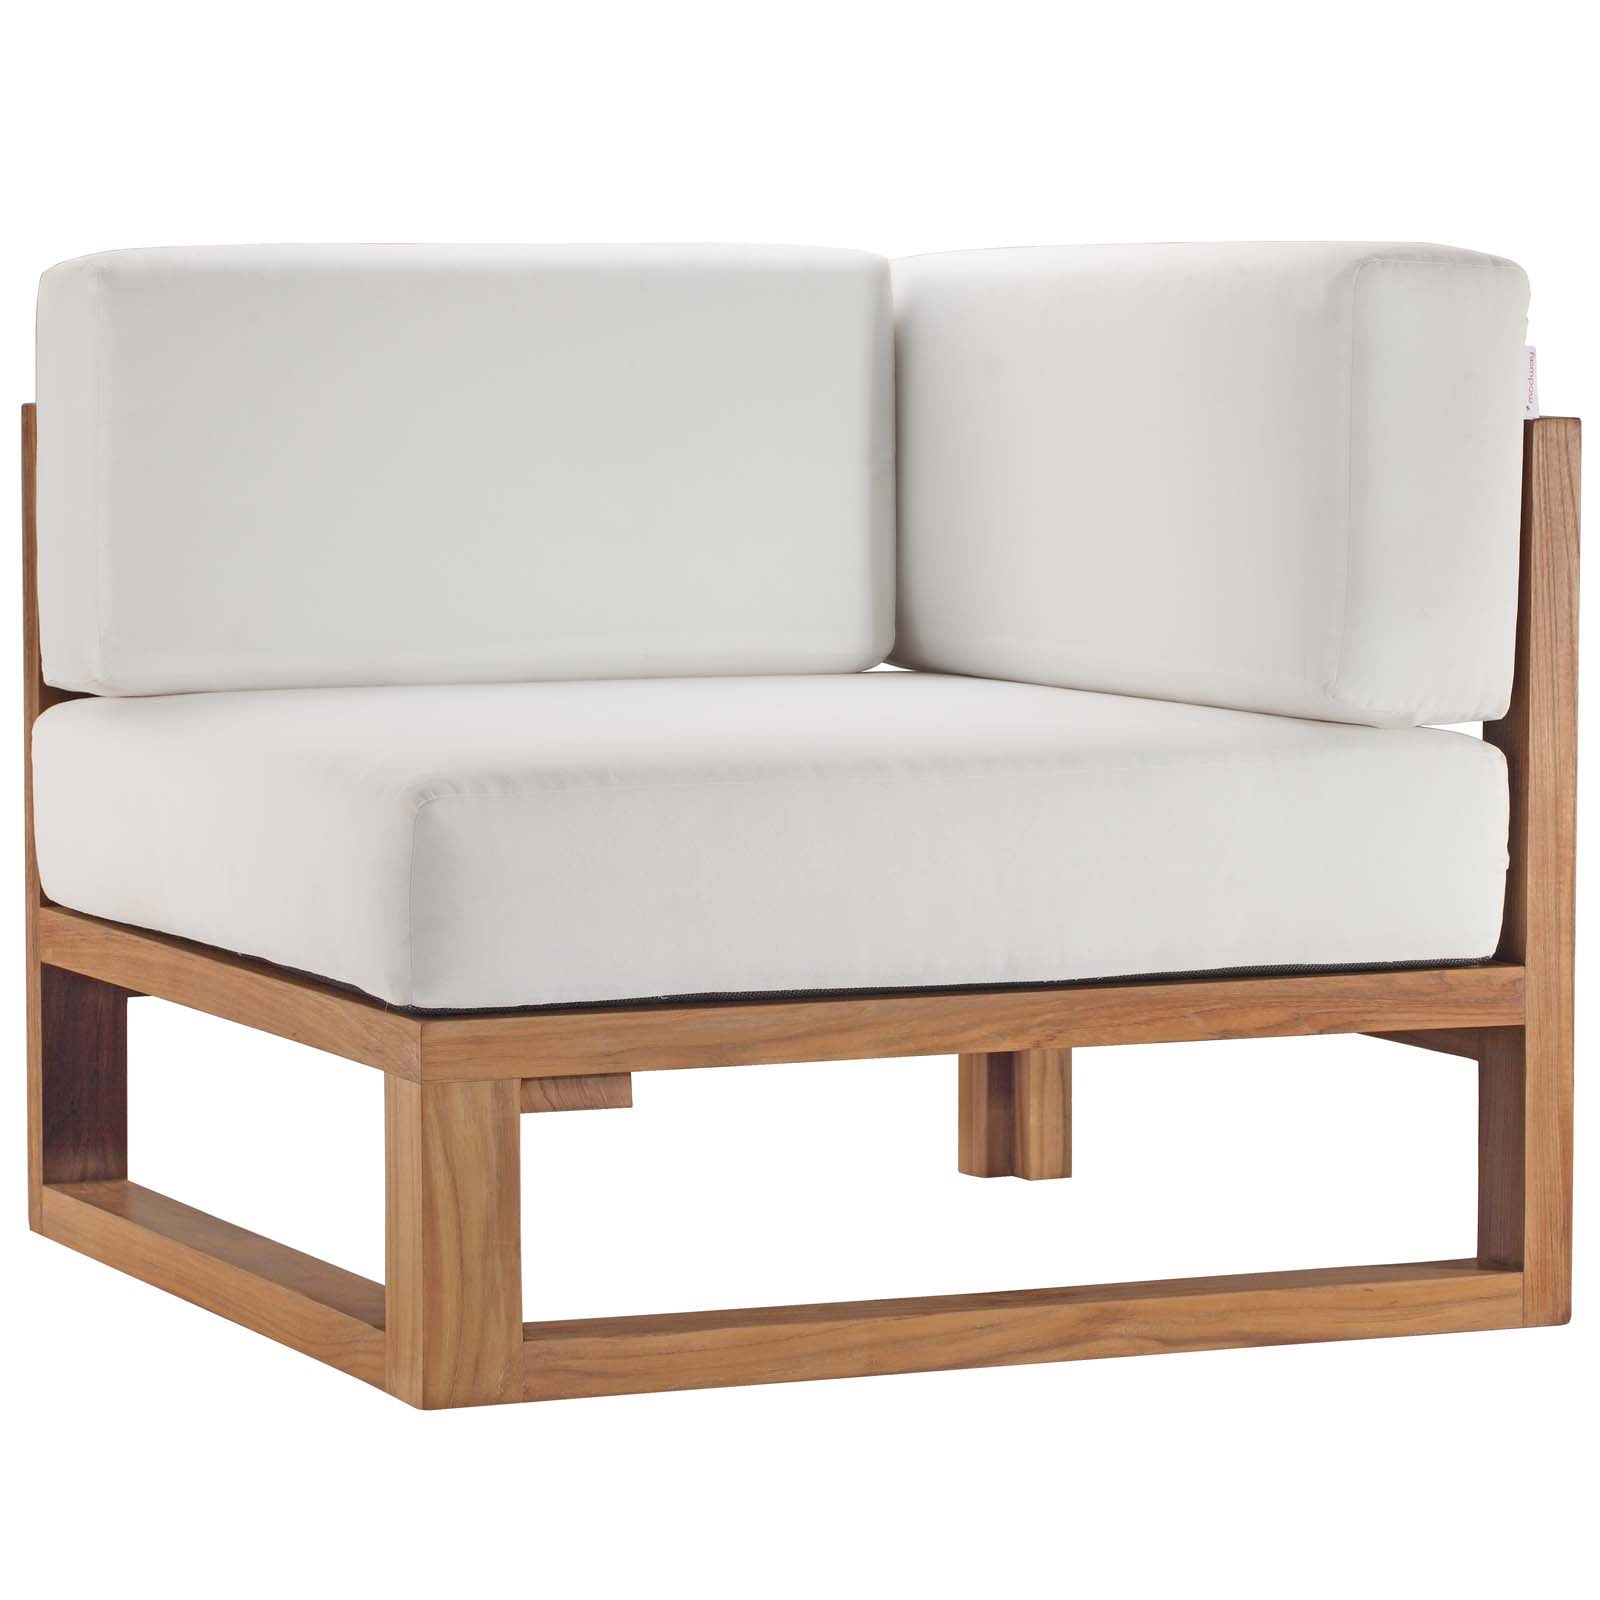 Upland Outdoor Patio Teak Wood Corner Chair-Outdoor Corner Chair-Modway-Wall2Wall Furnishings